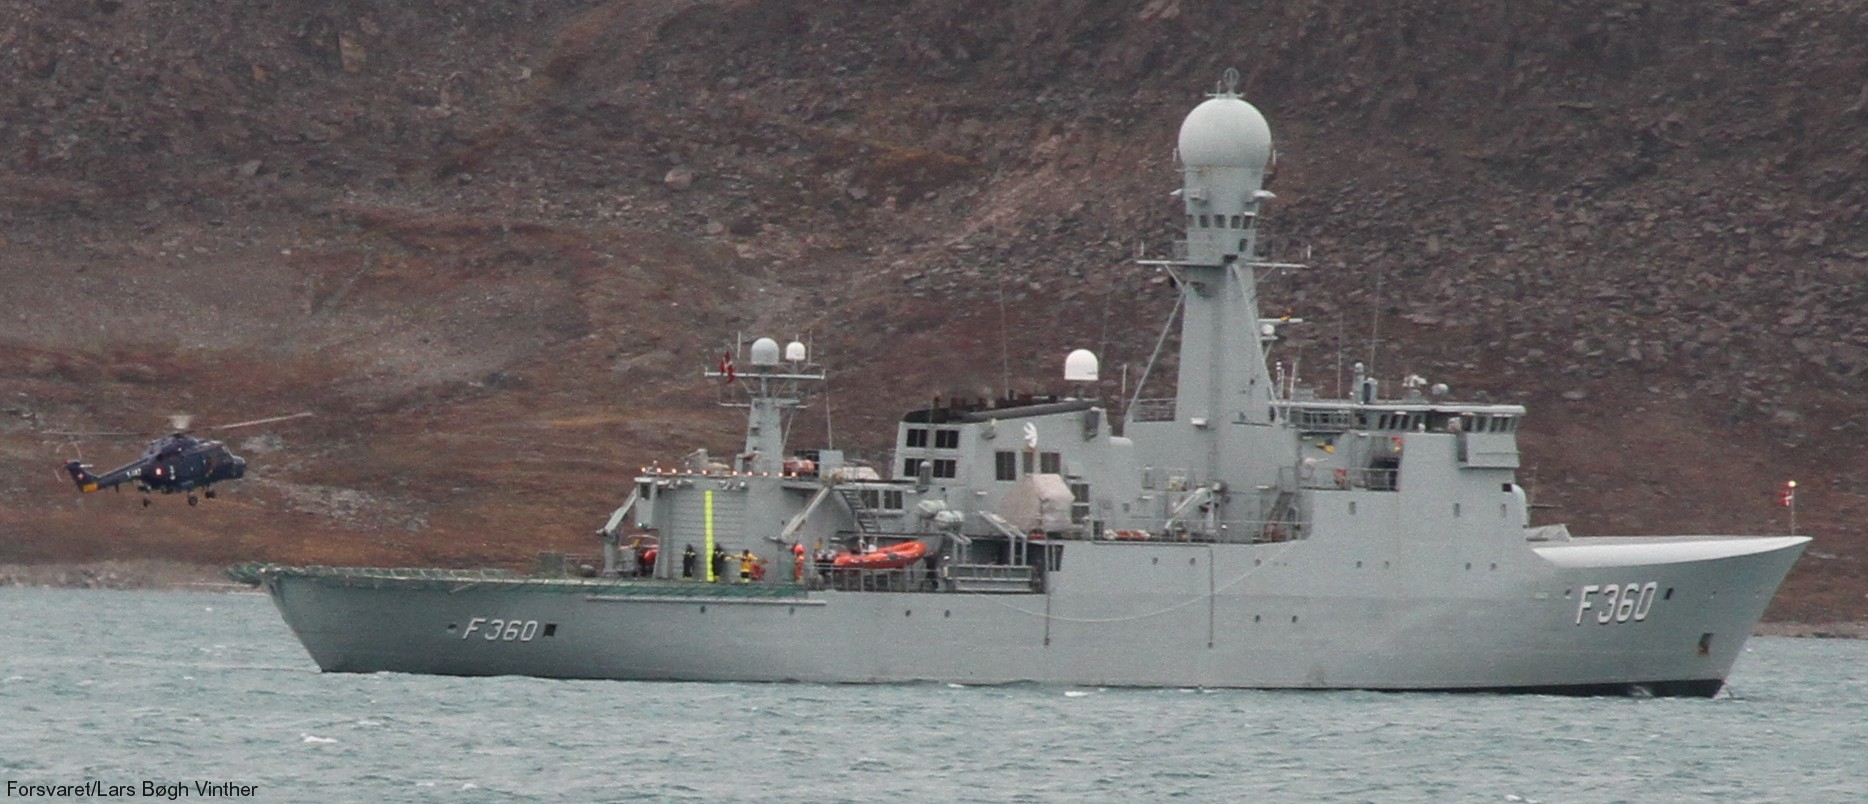 f-360 hdms hvidbjornen thetis class ocean patrol frigate royal danish navy kongelige danske marine kdm inspektionsskibet 23 westland lynx helicopter